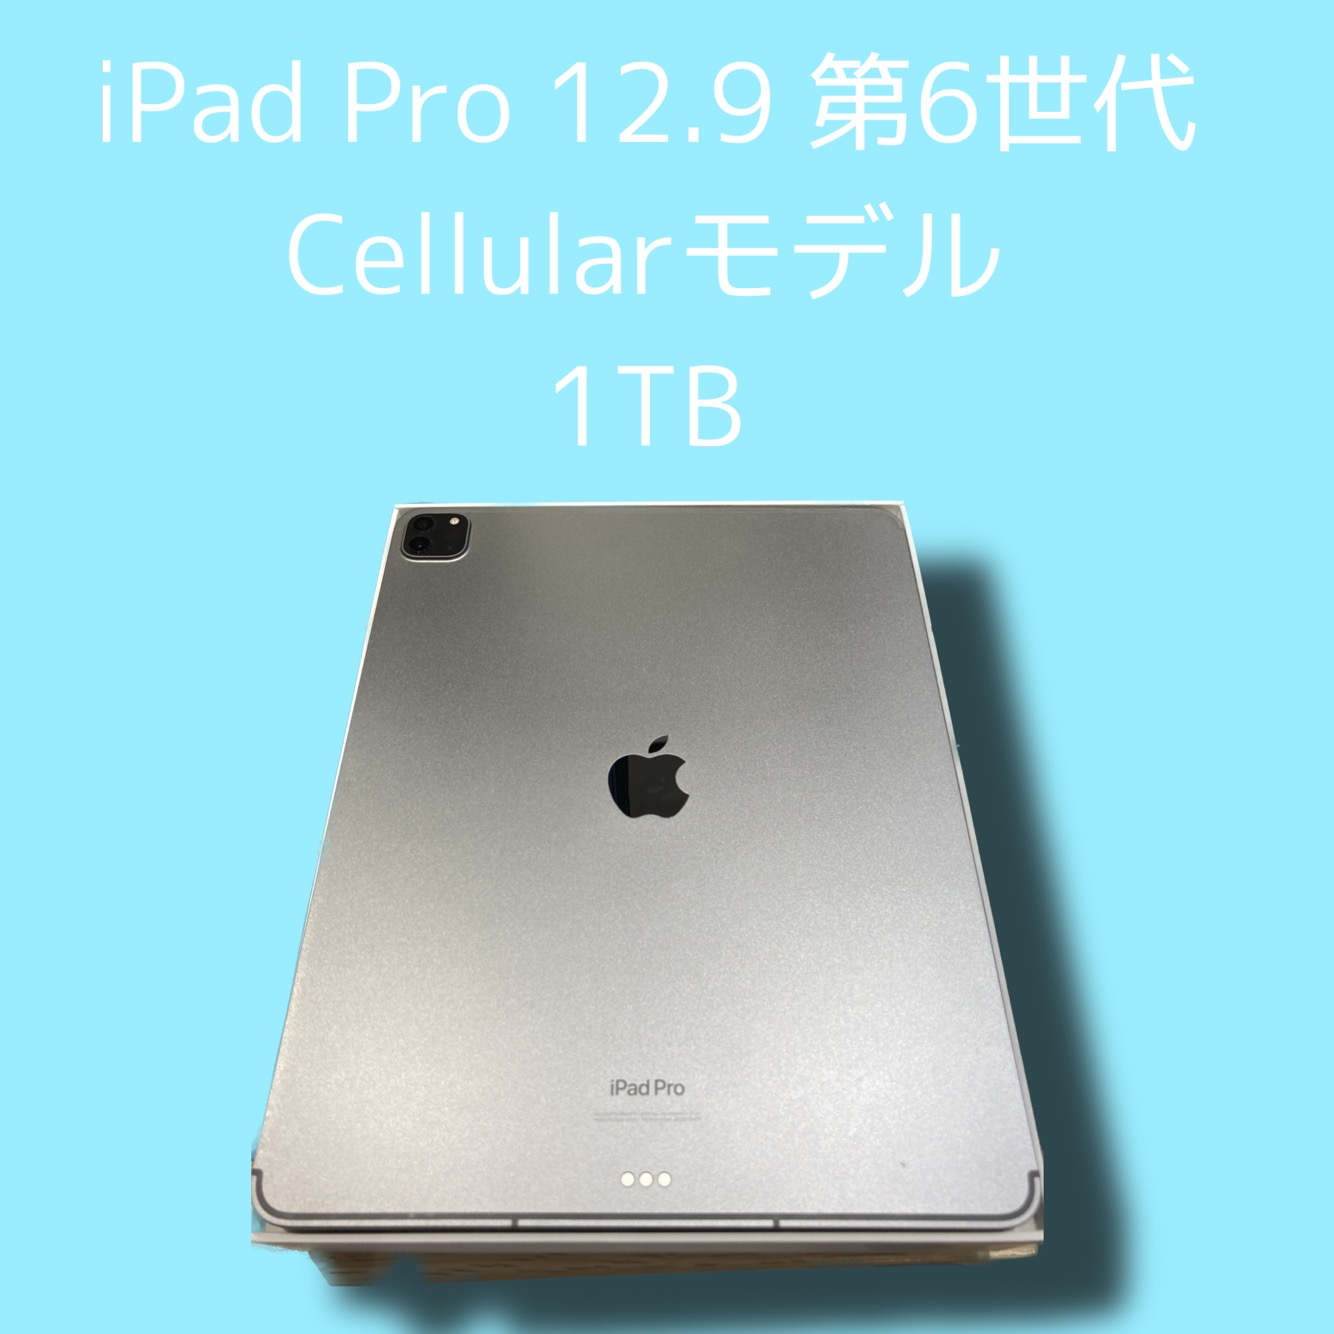 iPadPro 12.9 第6世代・1TB・Apple Cellularモデル・【天神地下街店】